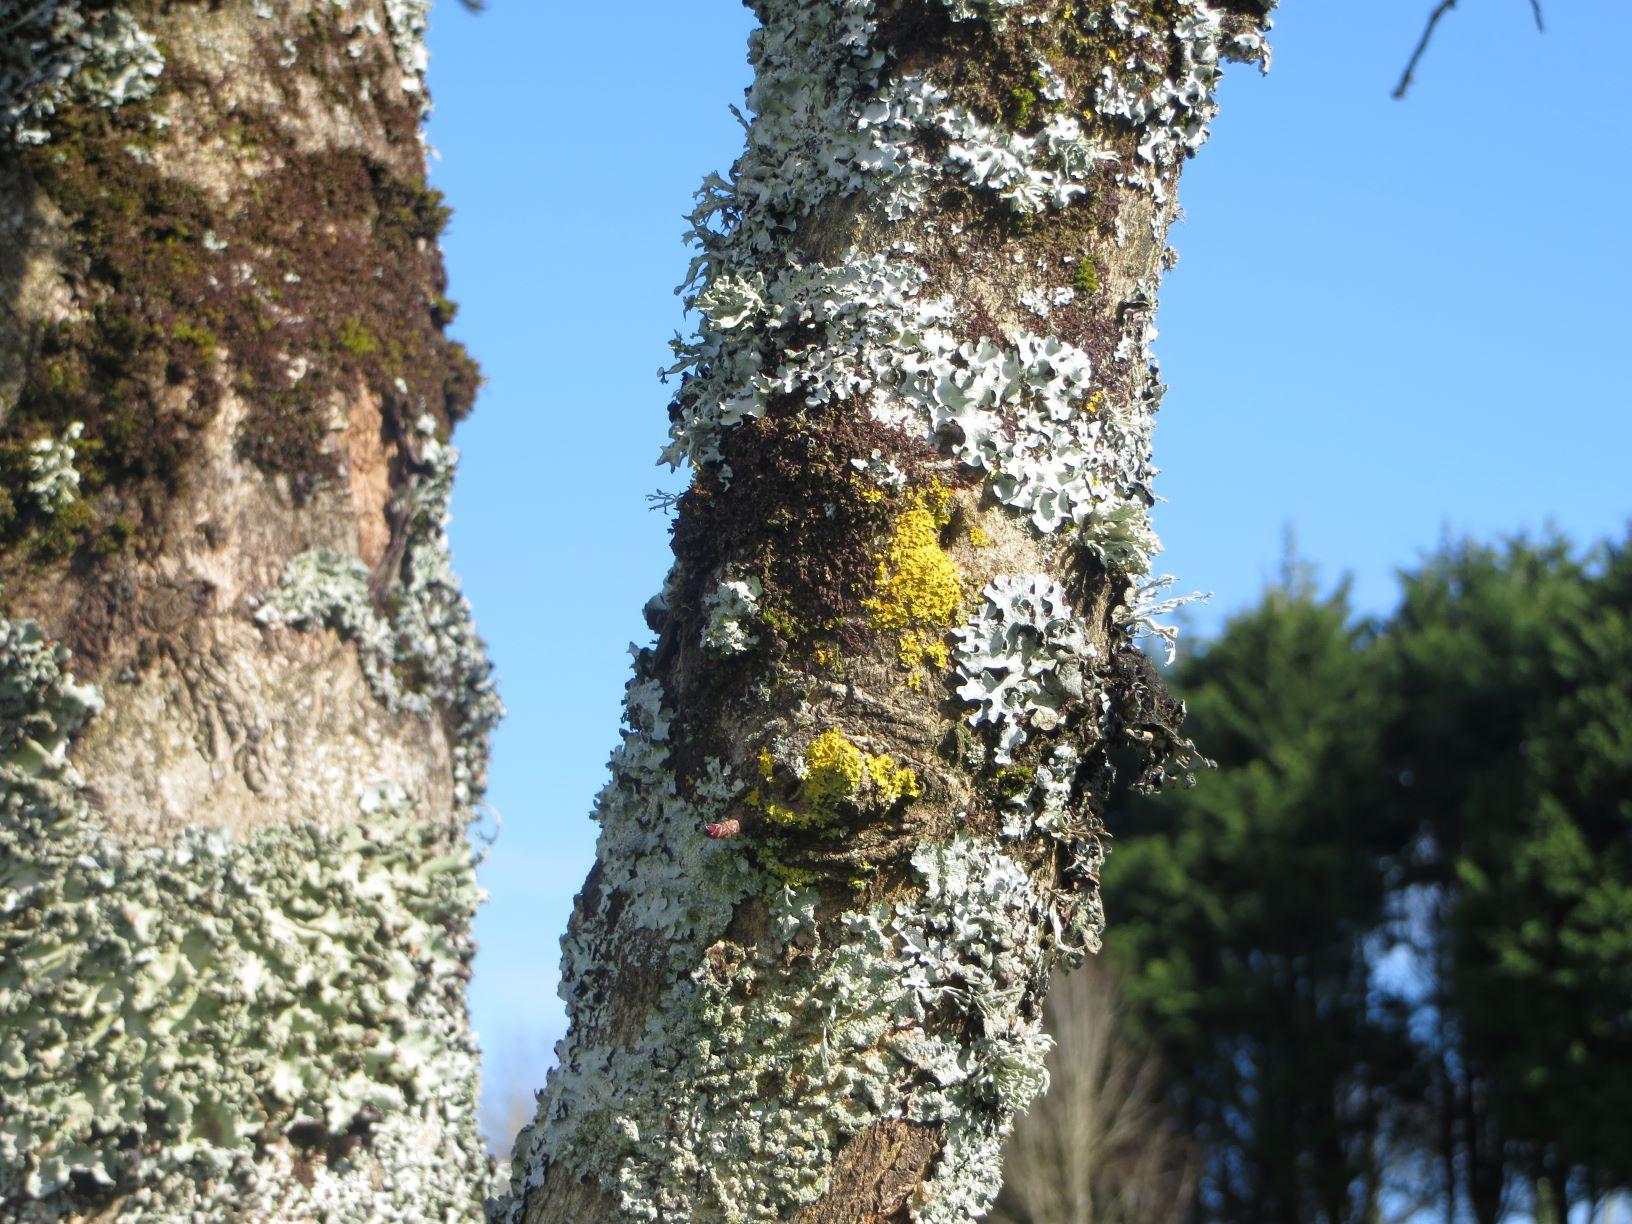 A close up shot of a tree